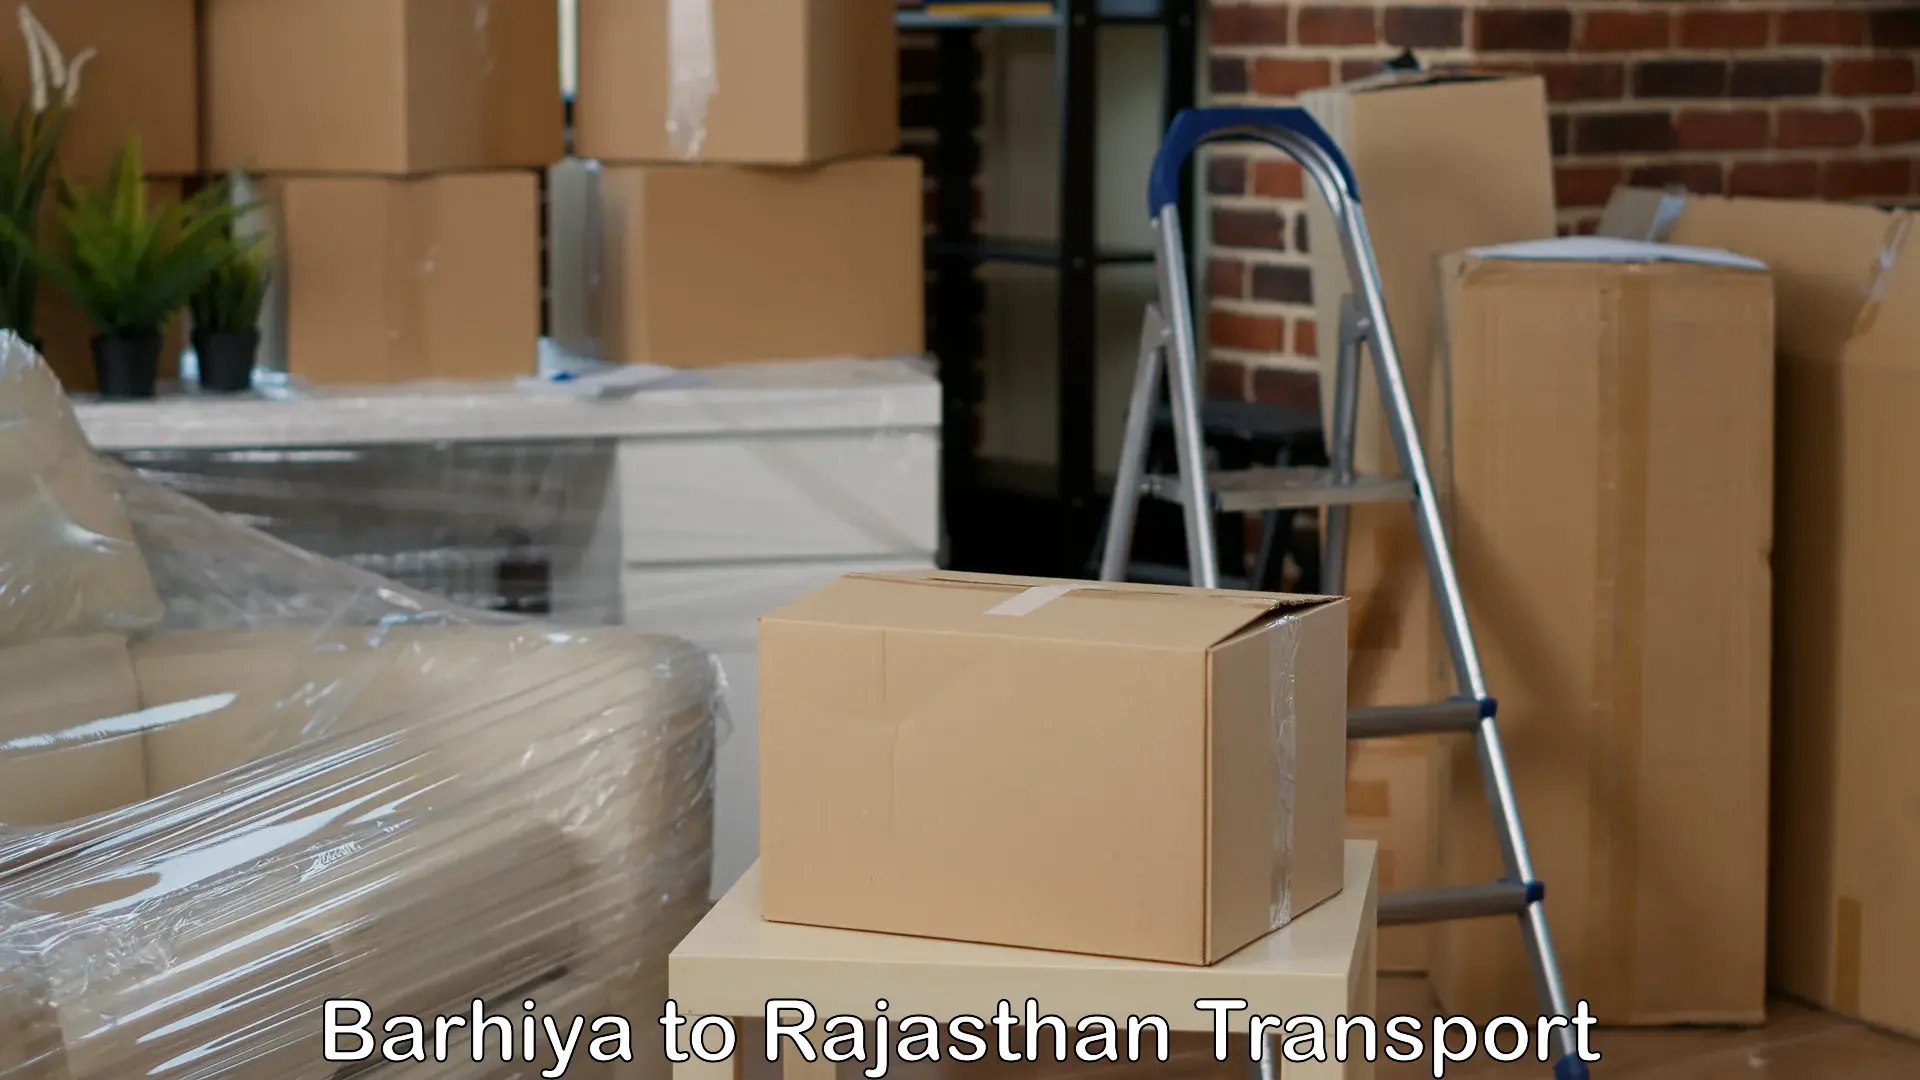 Truck transport companies in India Barhiya to Asind